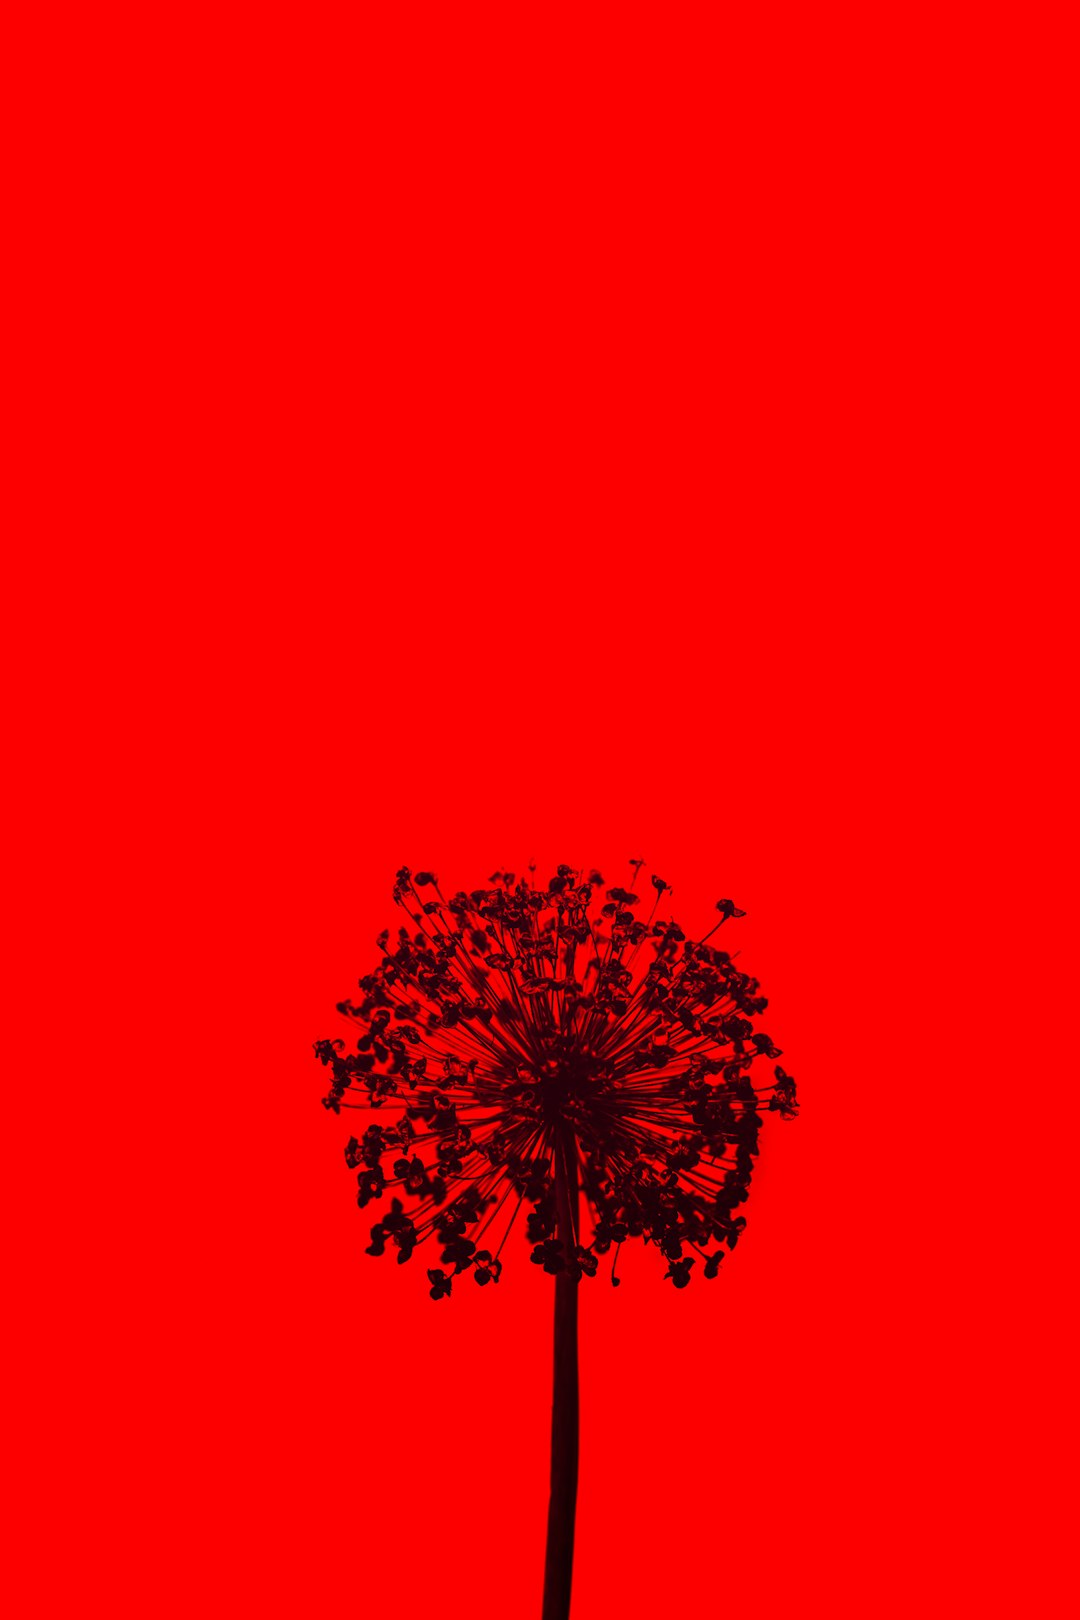 red and black tree illustration